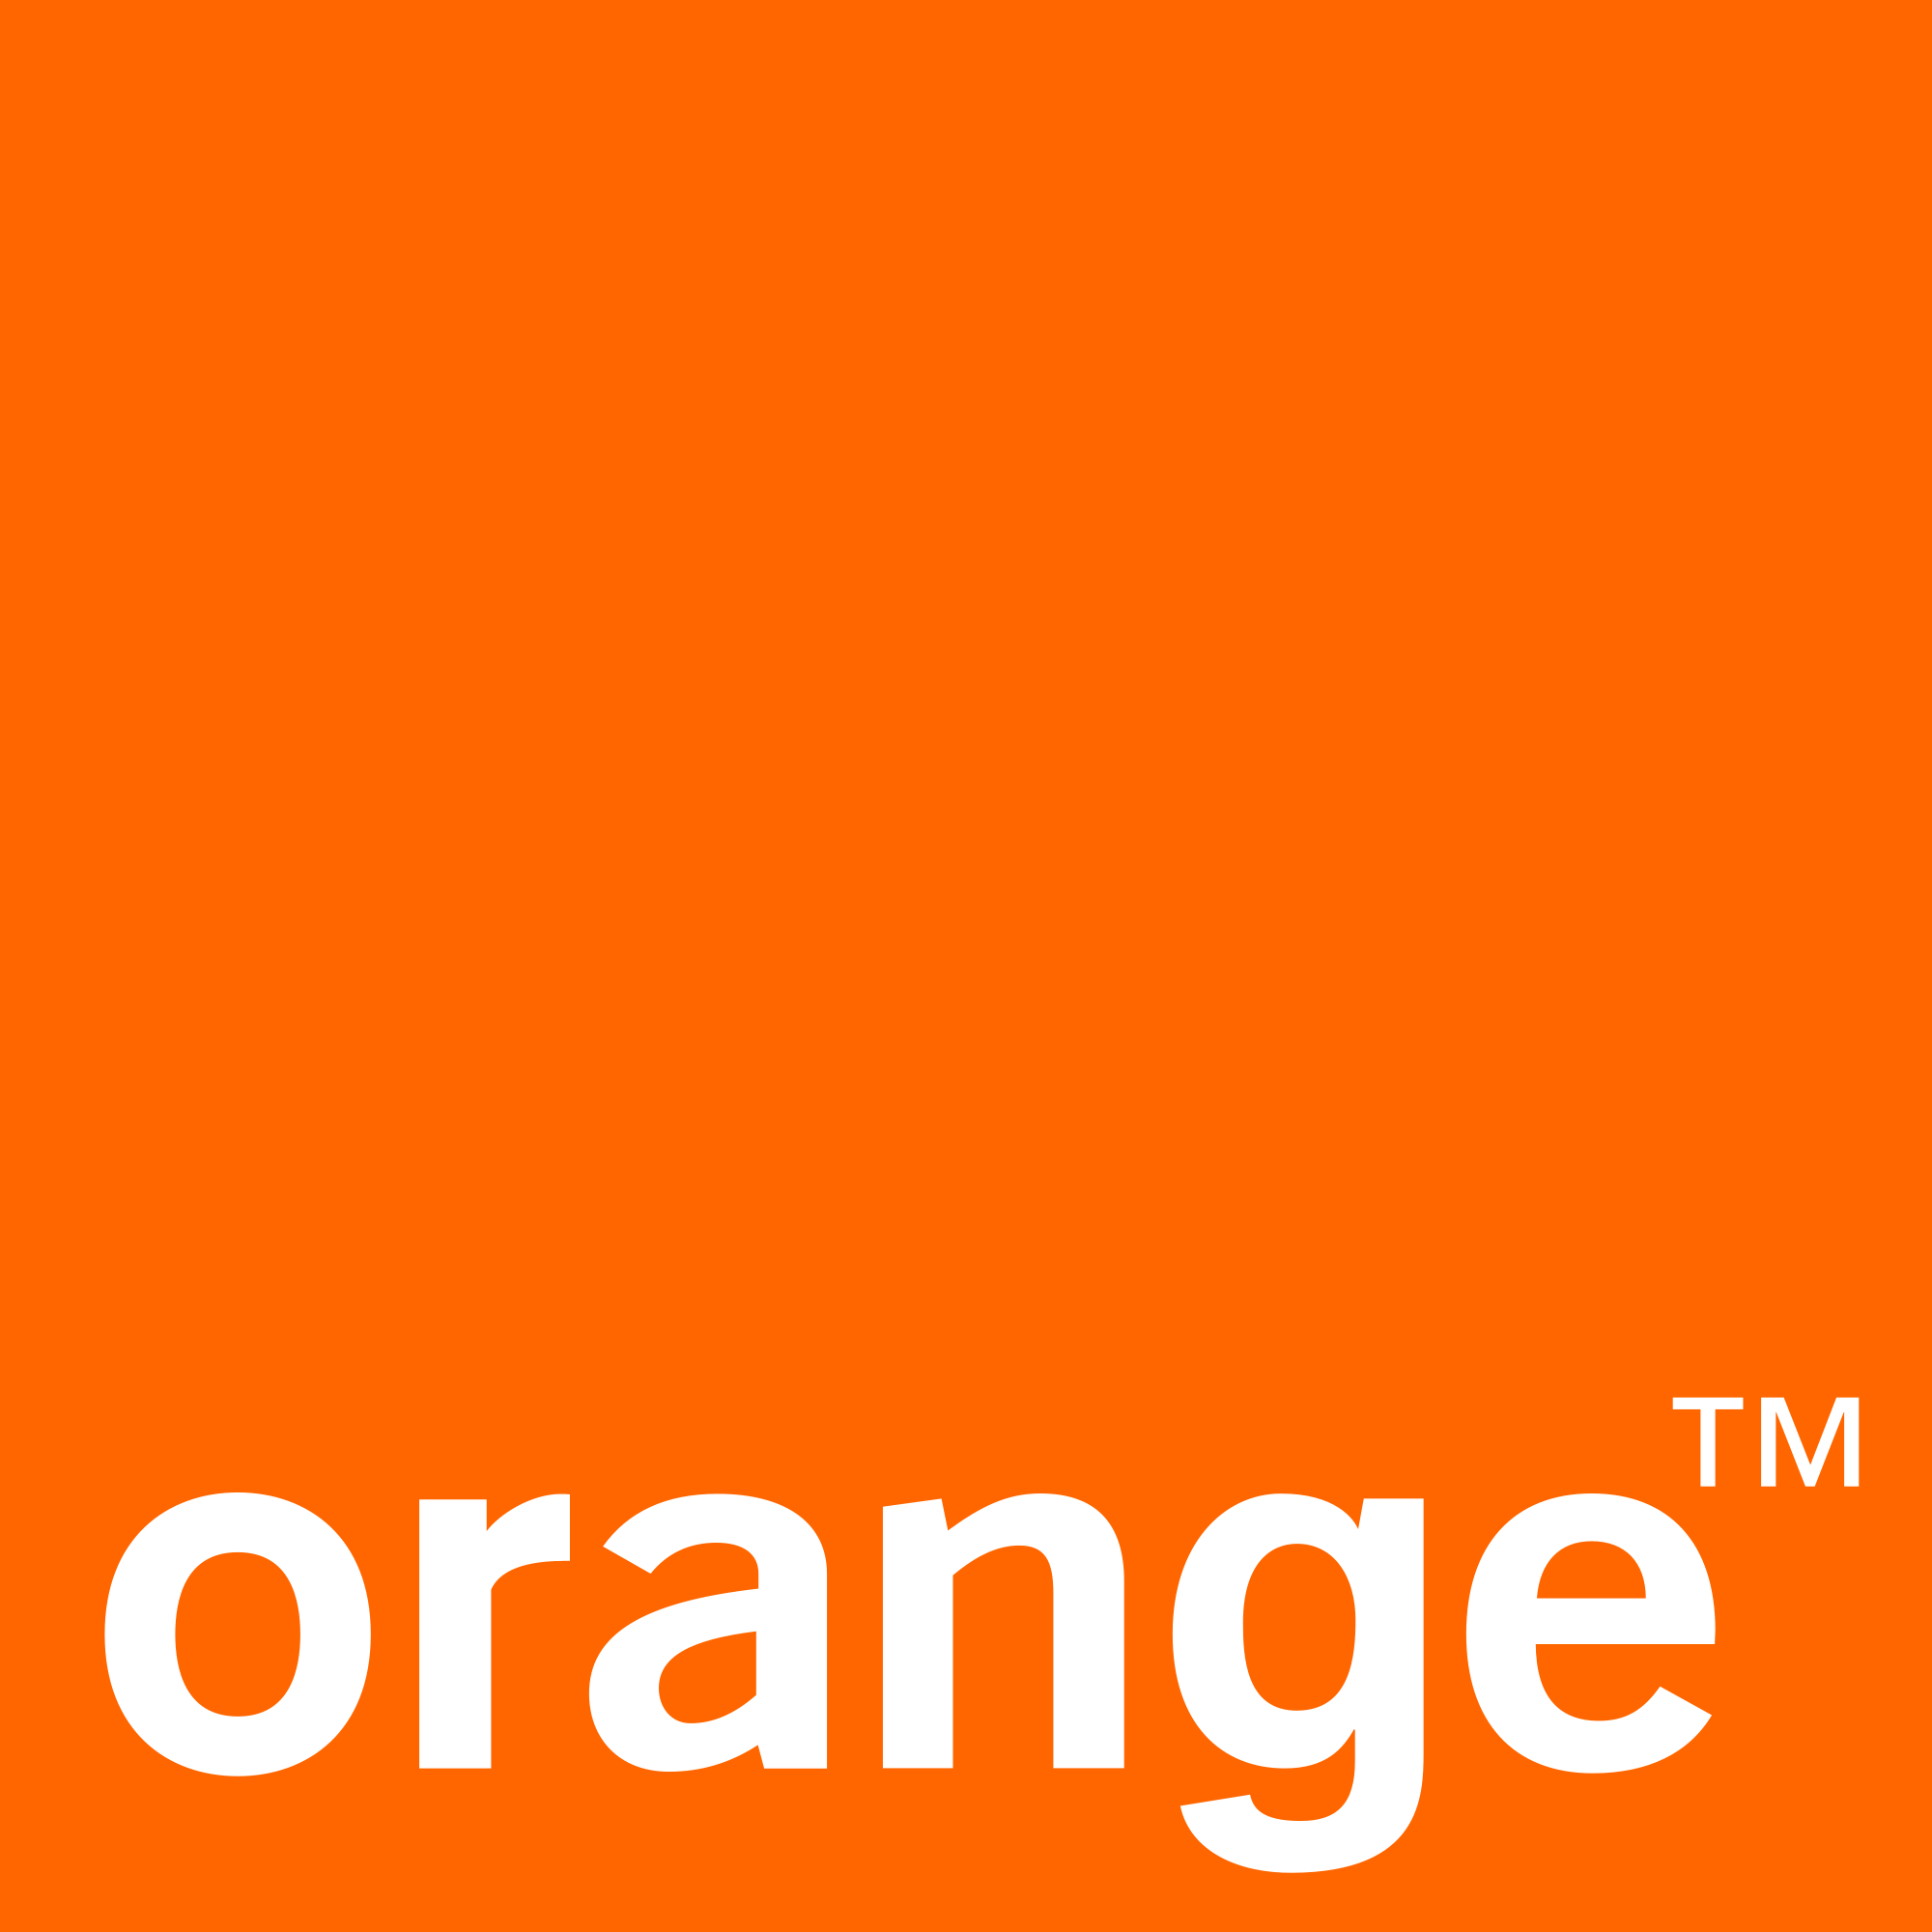 Orange Fondation